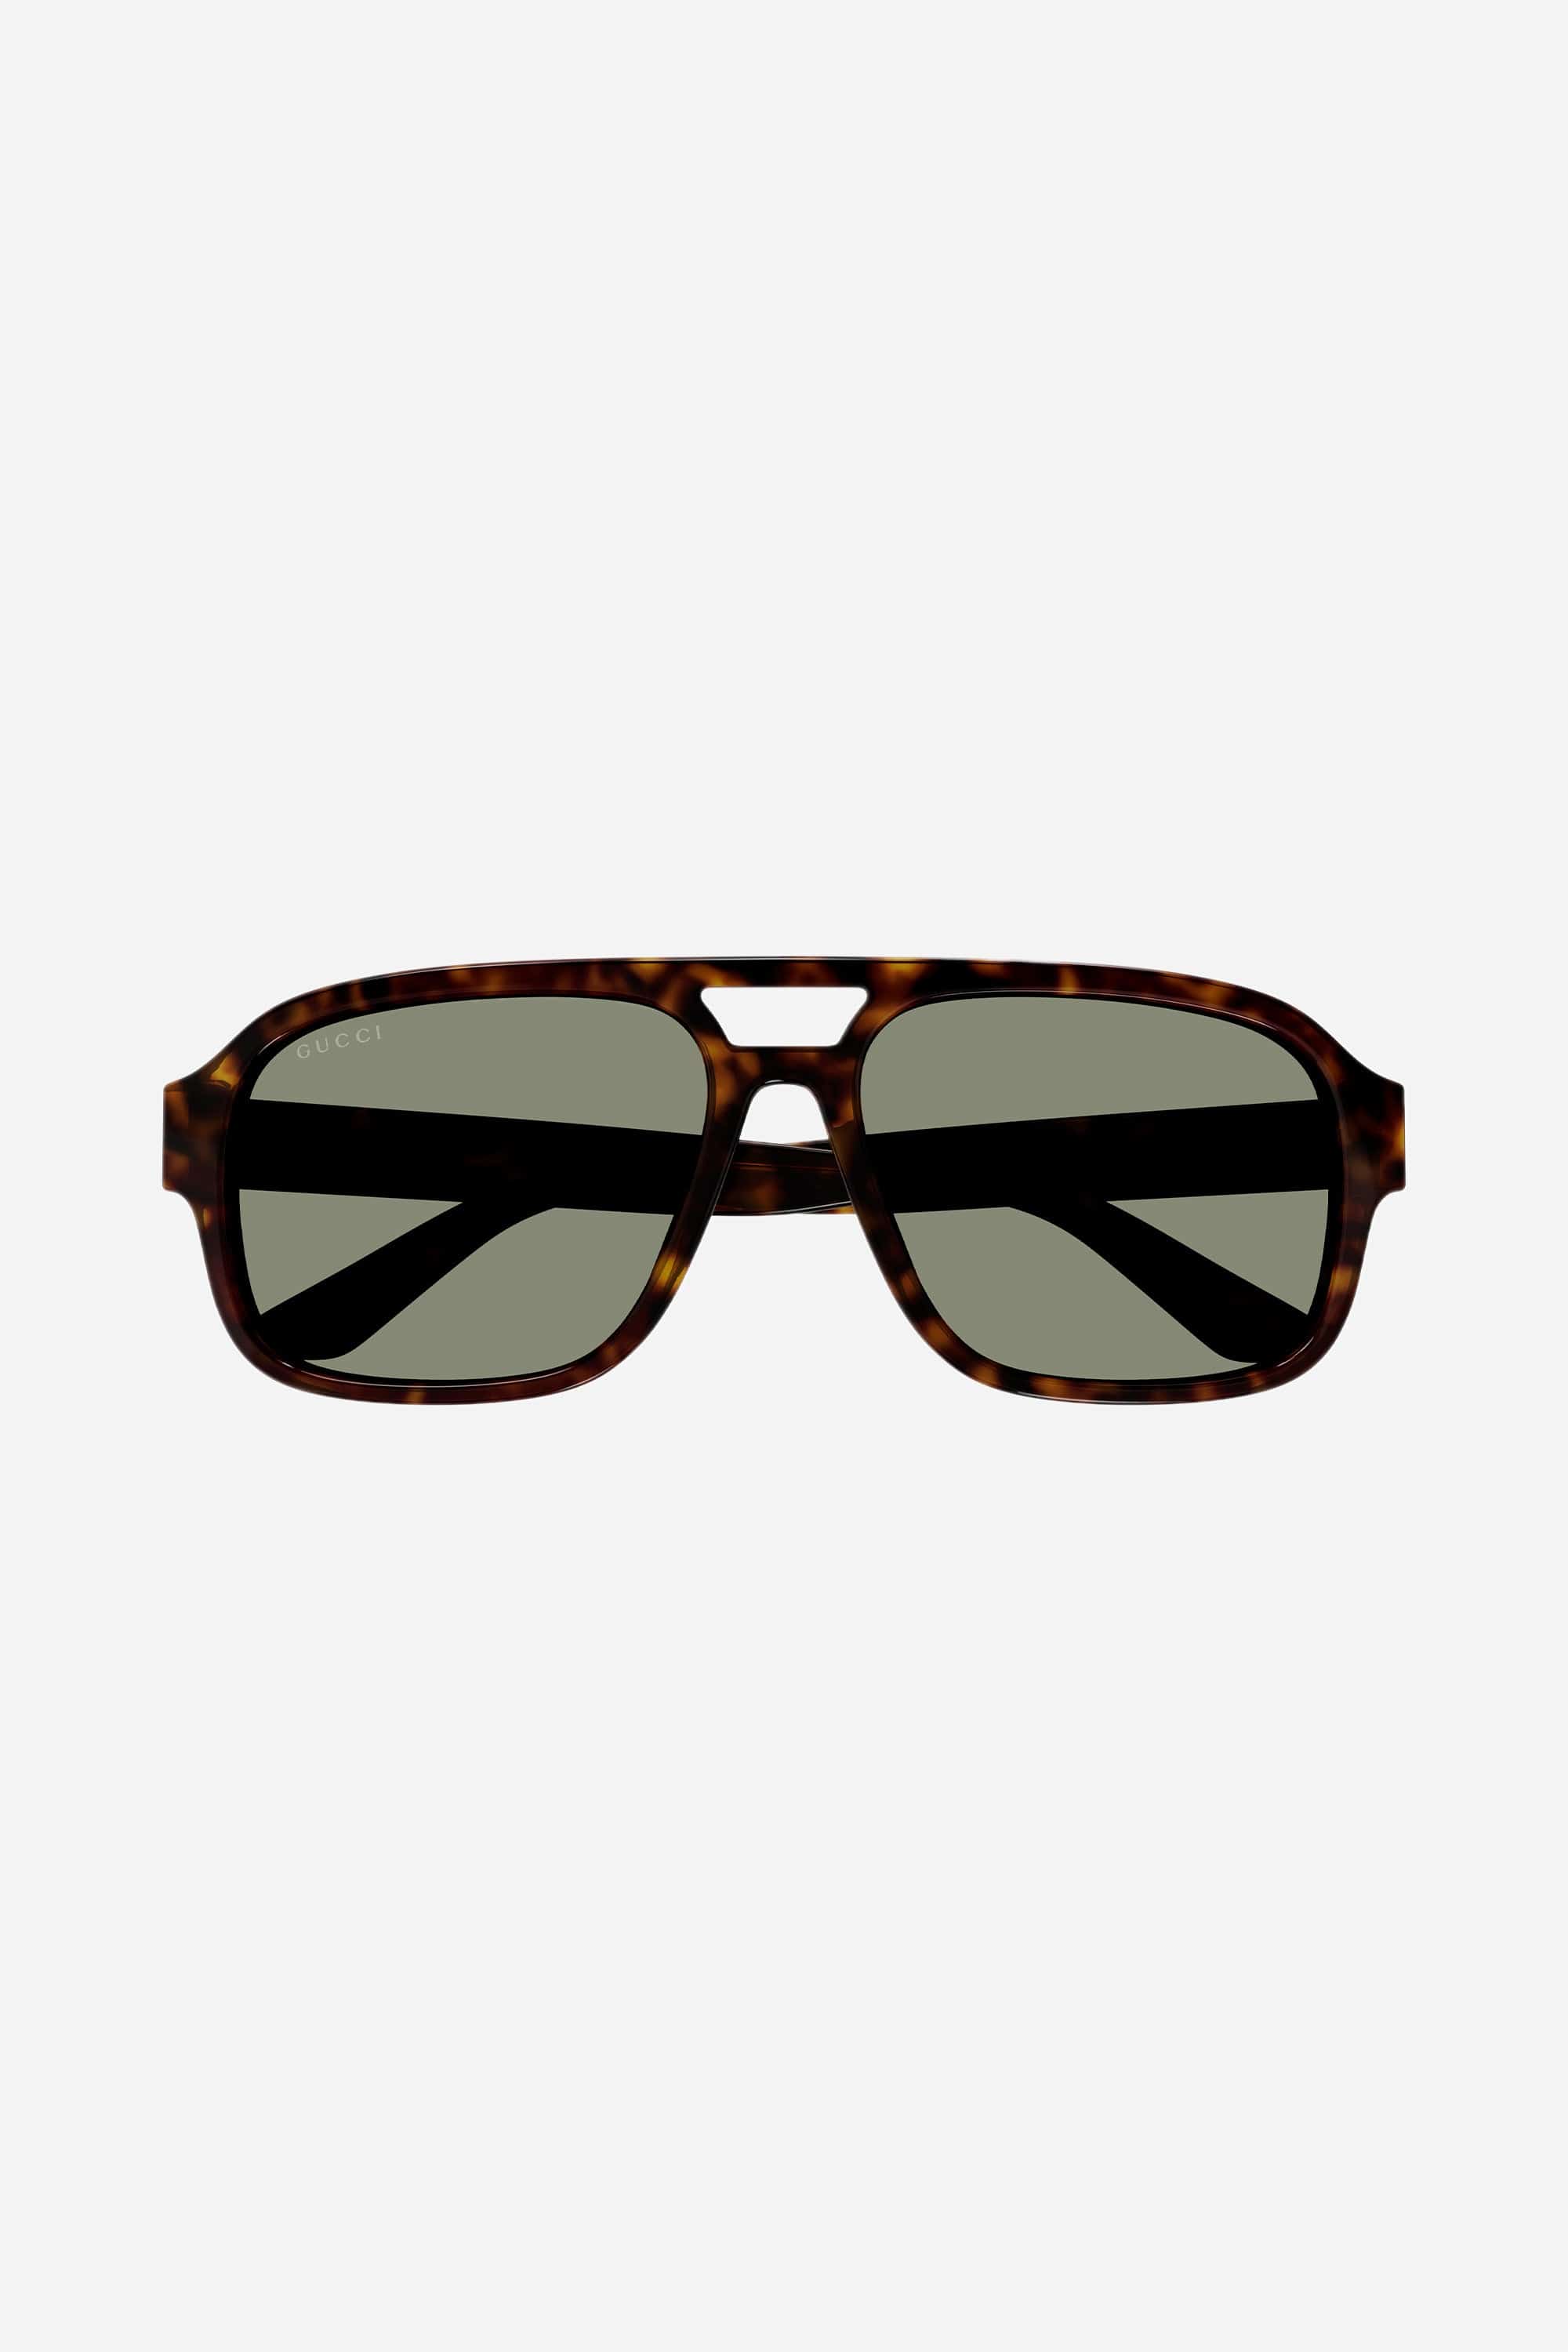 Gucci caravan dark havana sunglasses - Eyewear Club